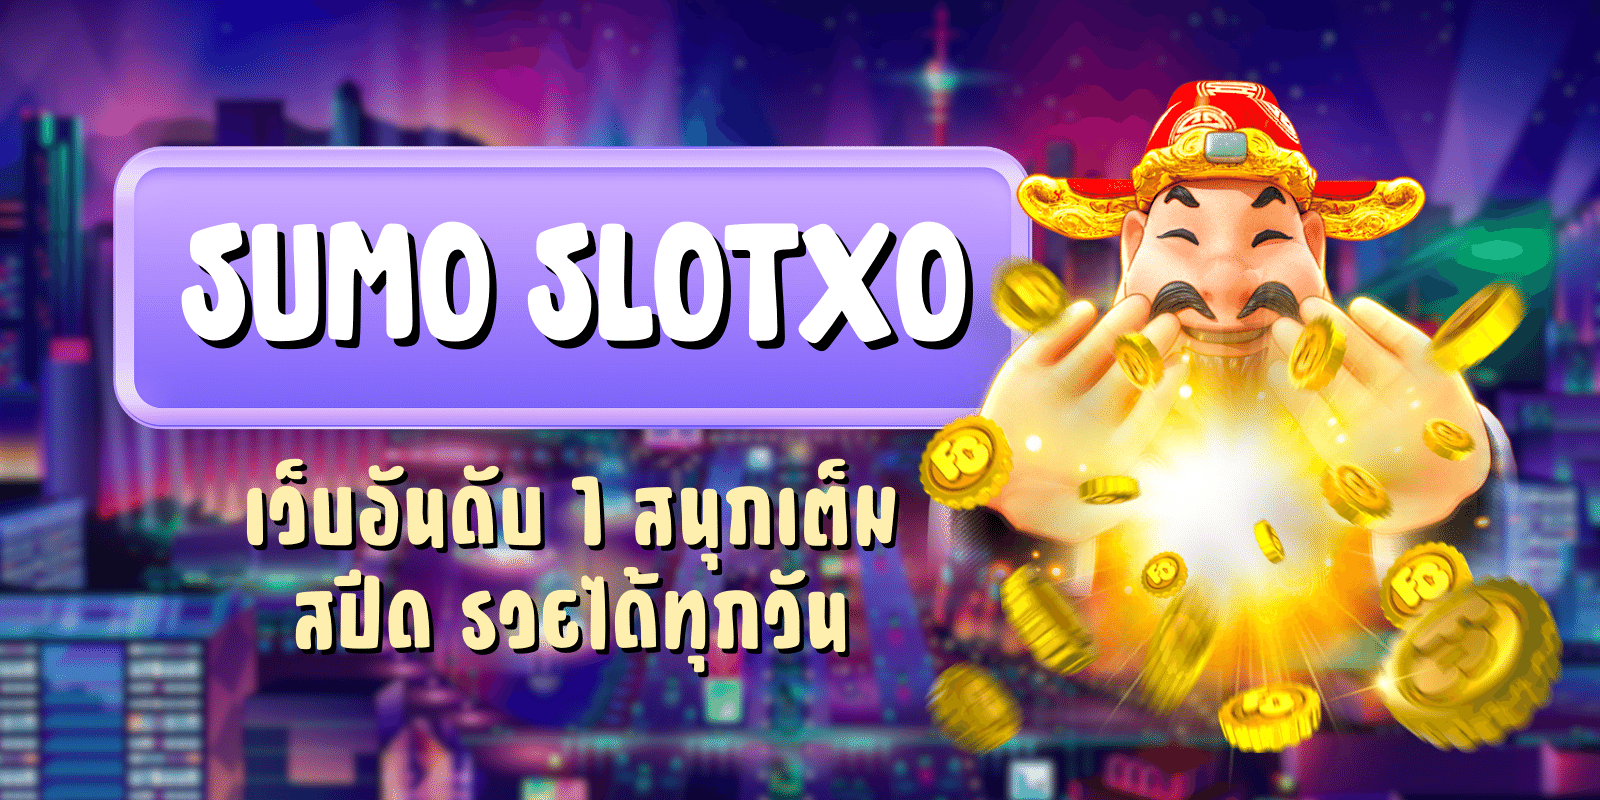 sumo slotxo เว็บอันดับ1 สนุกเต็มสปีด รวยได้ทุกวัน